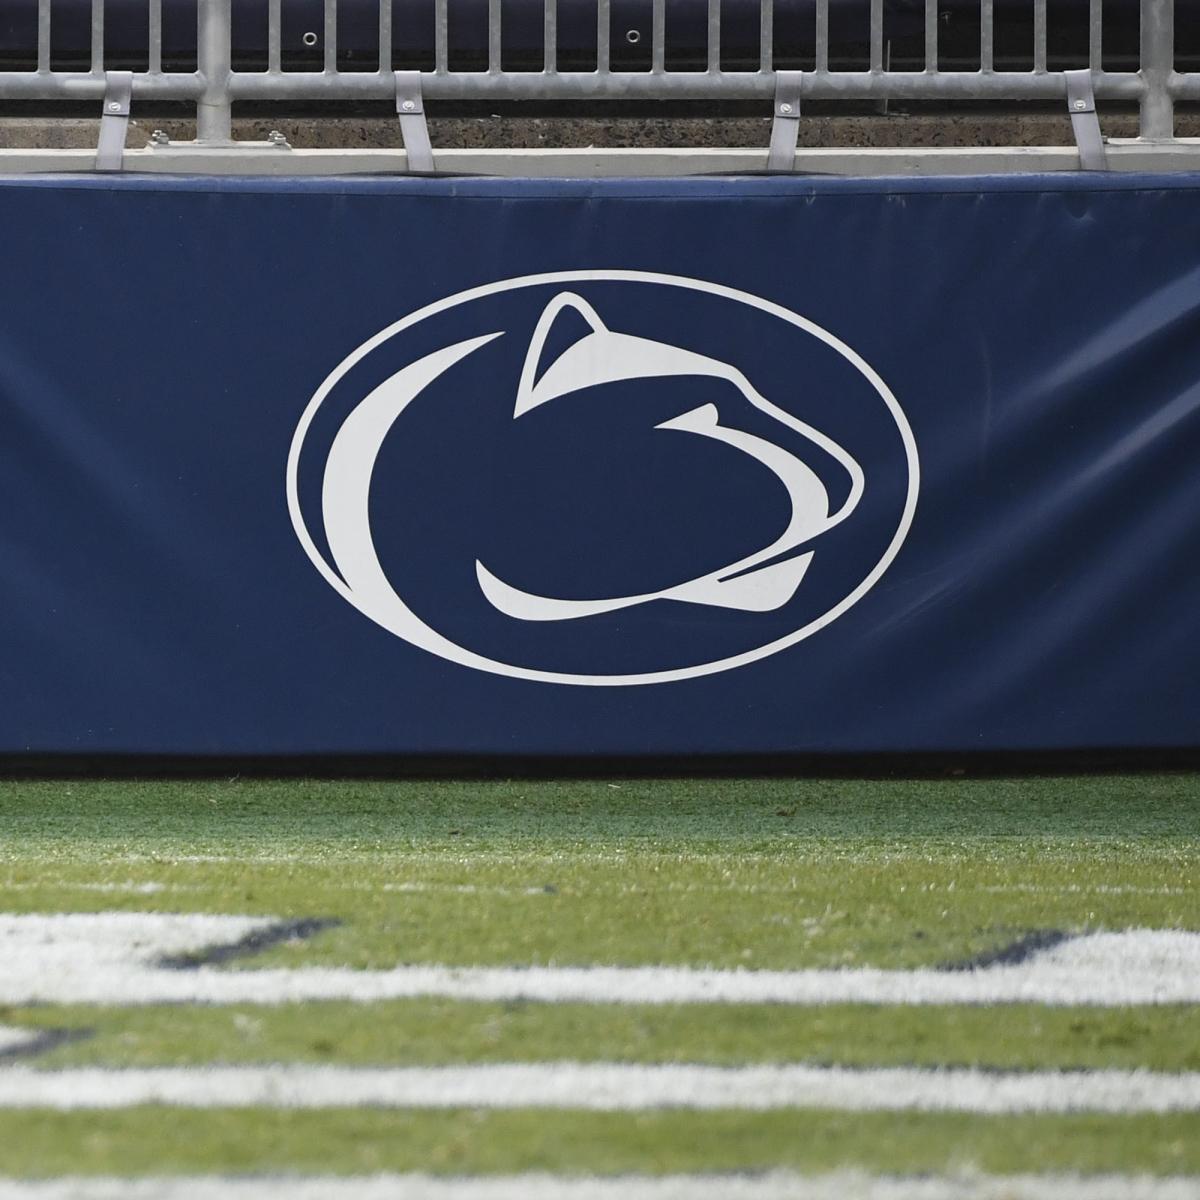 Penn Dispute Soccer Fixes Viral Gigantic Bowl Tweet: ‘No Magnifying Glass Wanted’